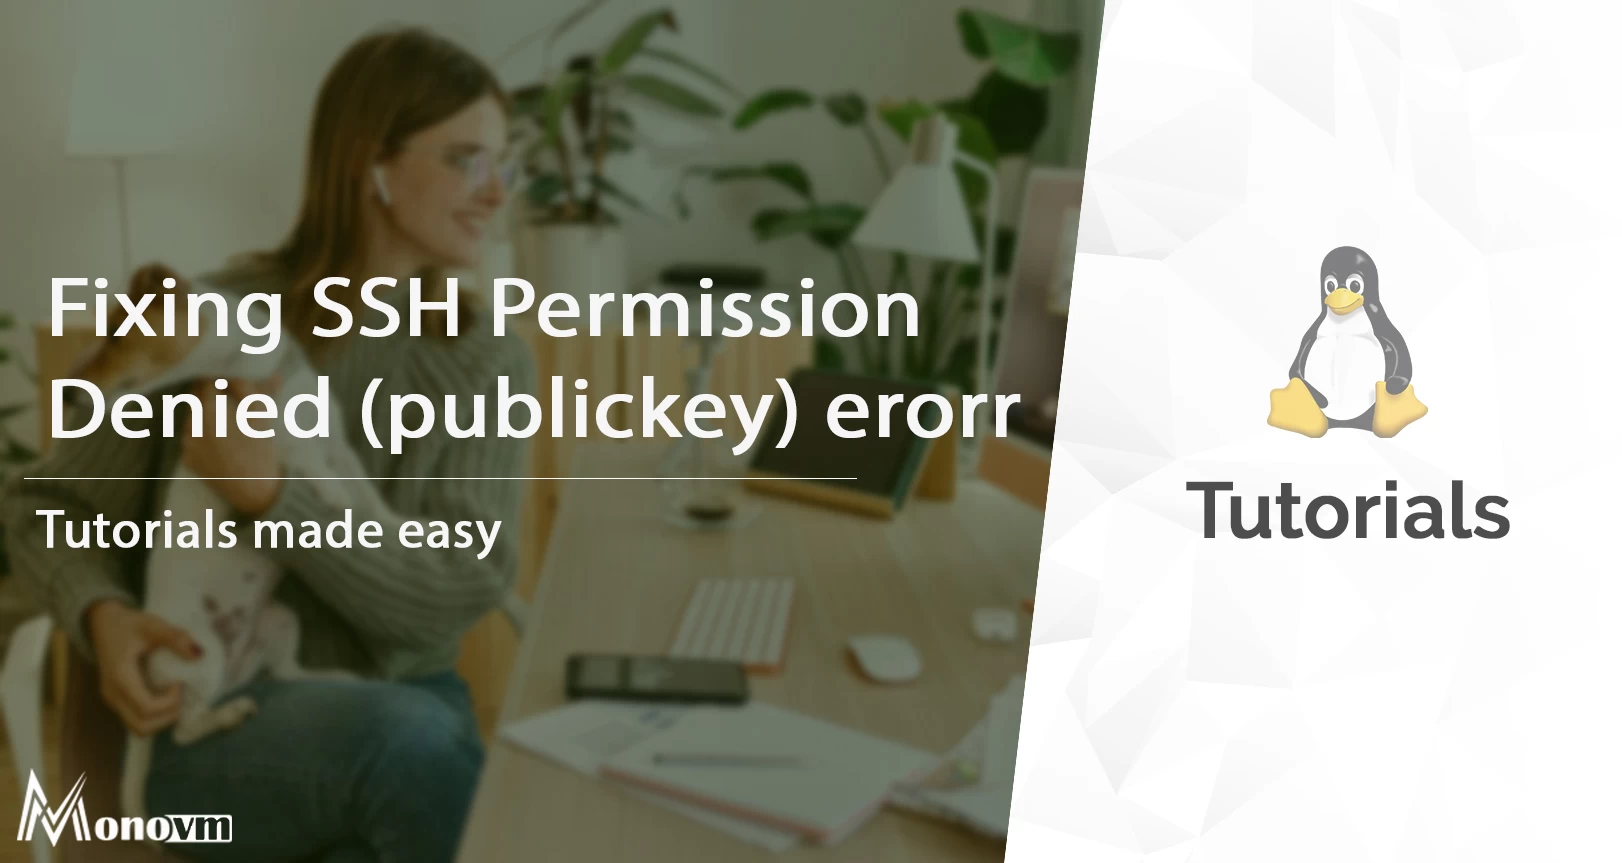 Troubleshooting SSH Permission Denied (publickey)